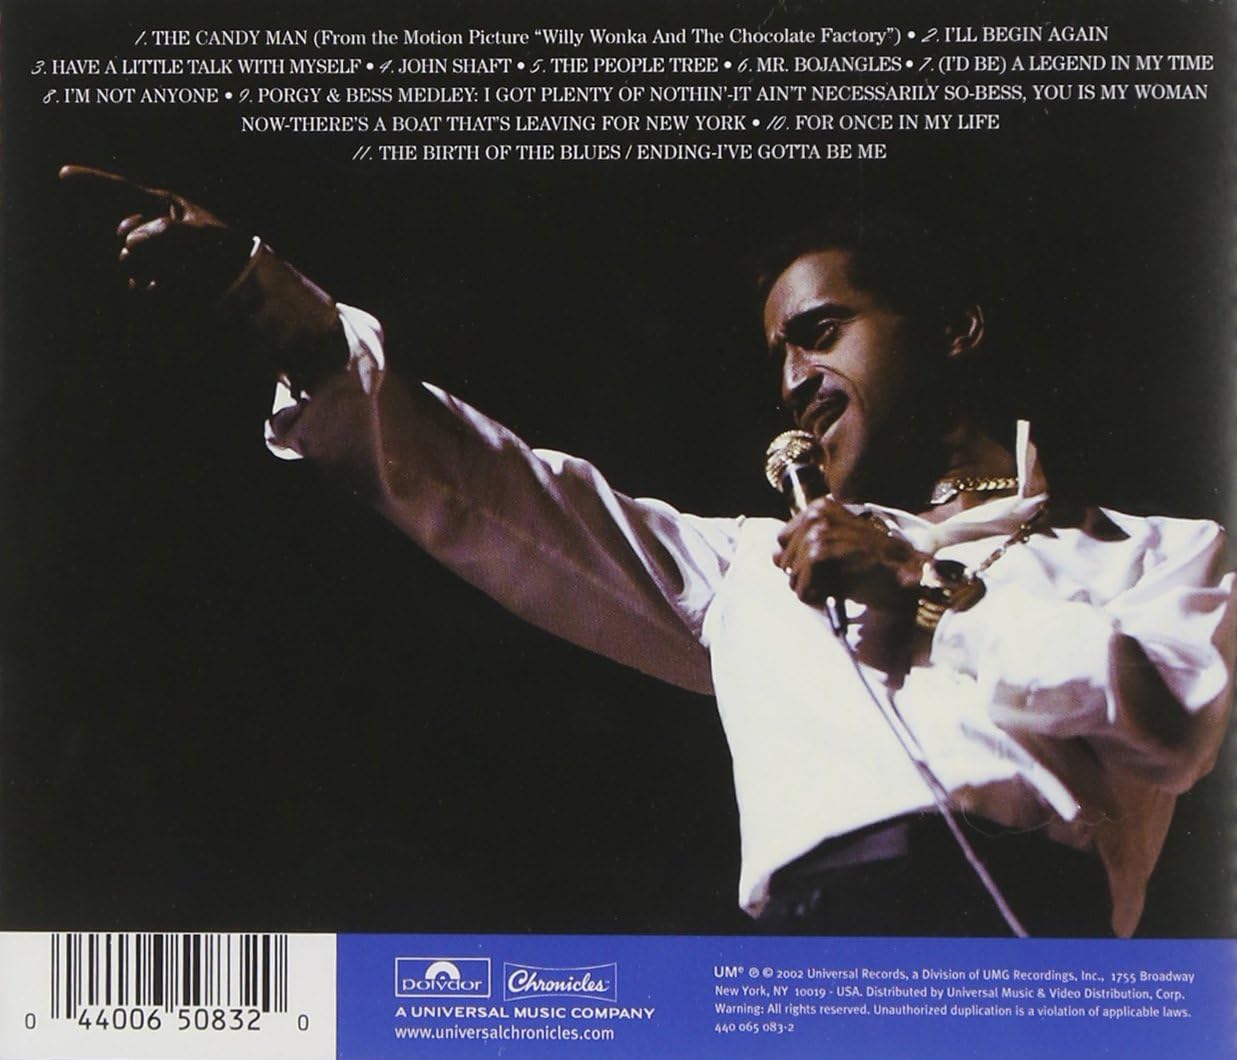 USED CD - Sammy Davis Jr. - 20th Century Masters: Millennium Collection